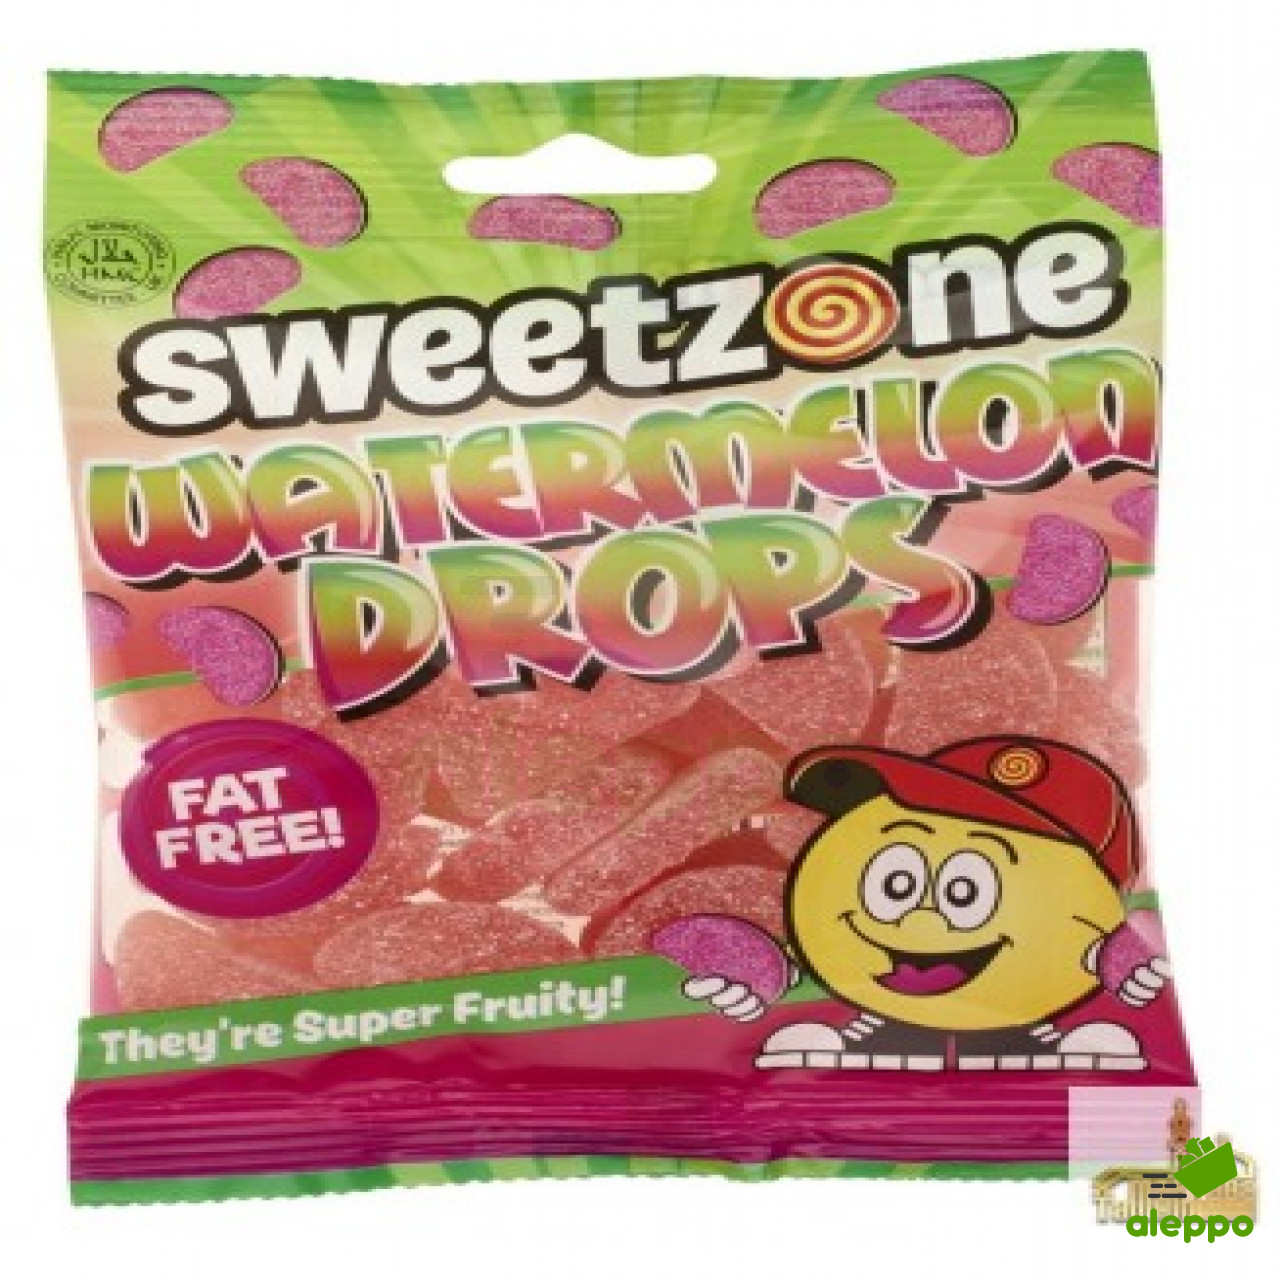 Sweetzone Fizzy Watermelon Drops 90g - Anta Foods Ltd